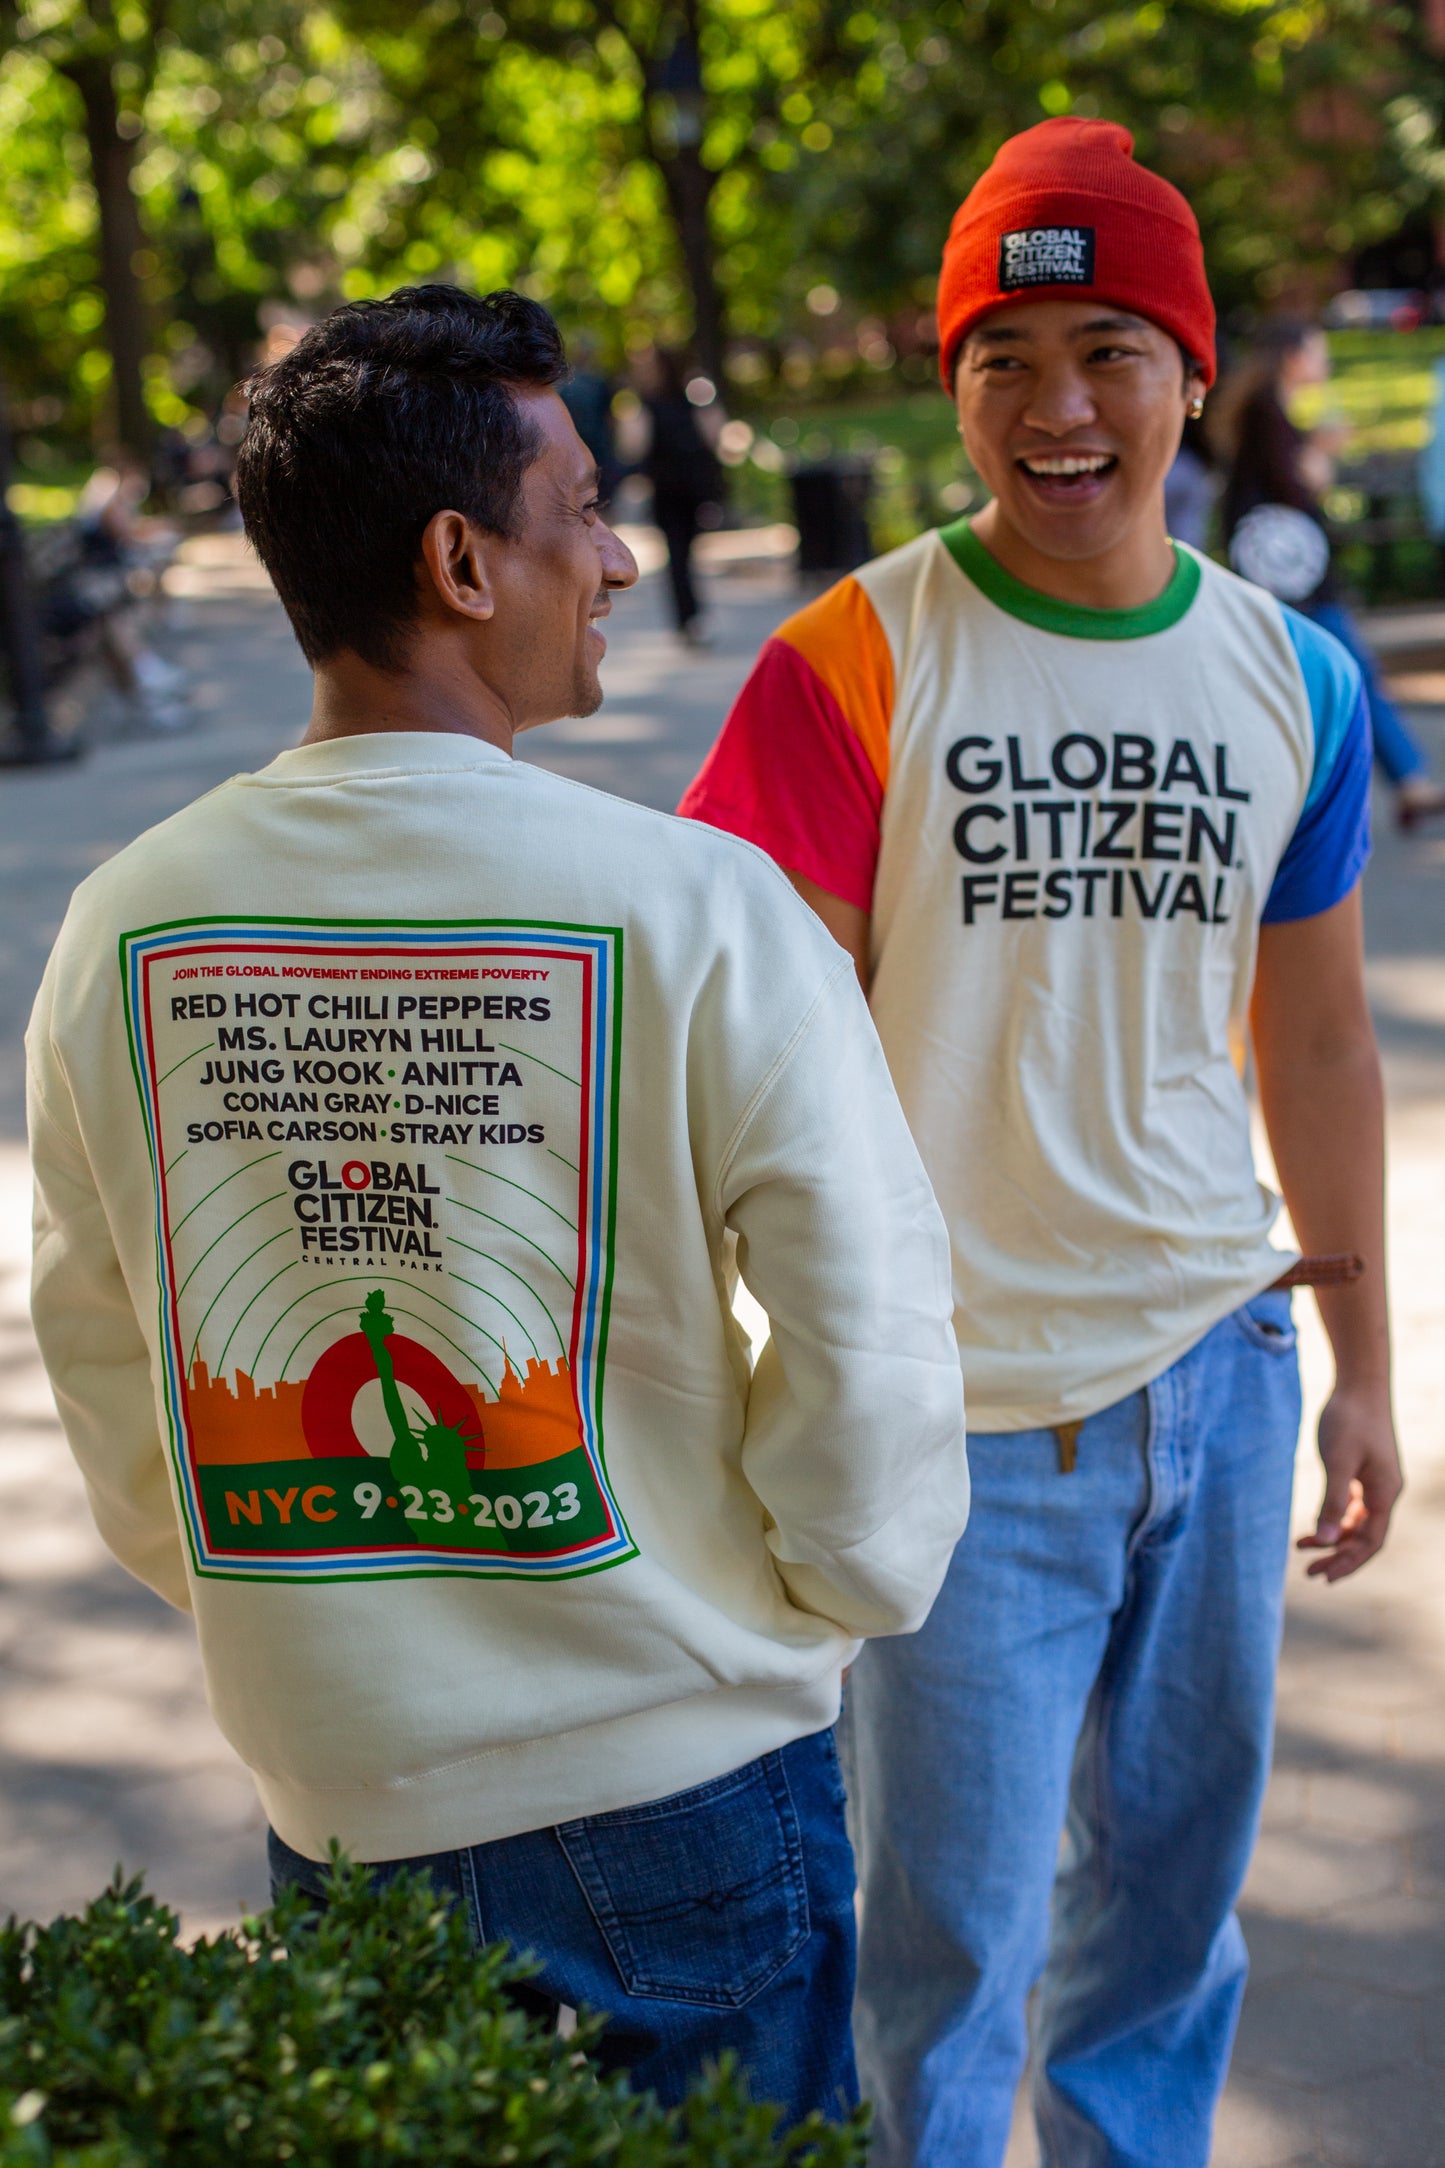 GCF 2023 Beanie - Global Citizen